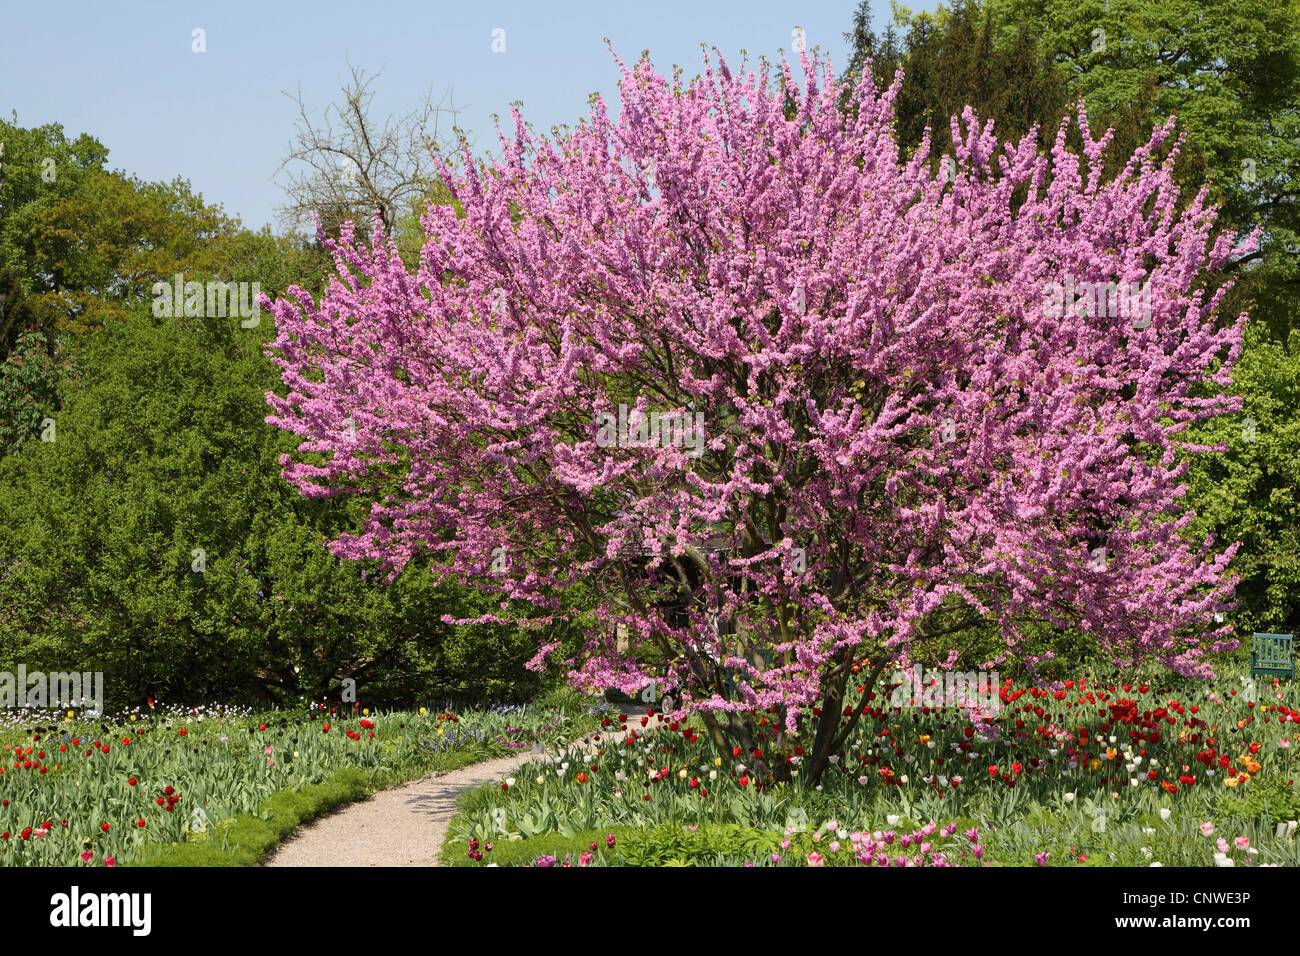 judas tree (Cercis siliquastrum), blooming in a park Stock Photo